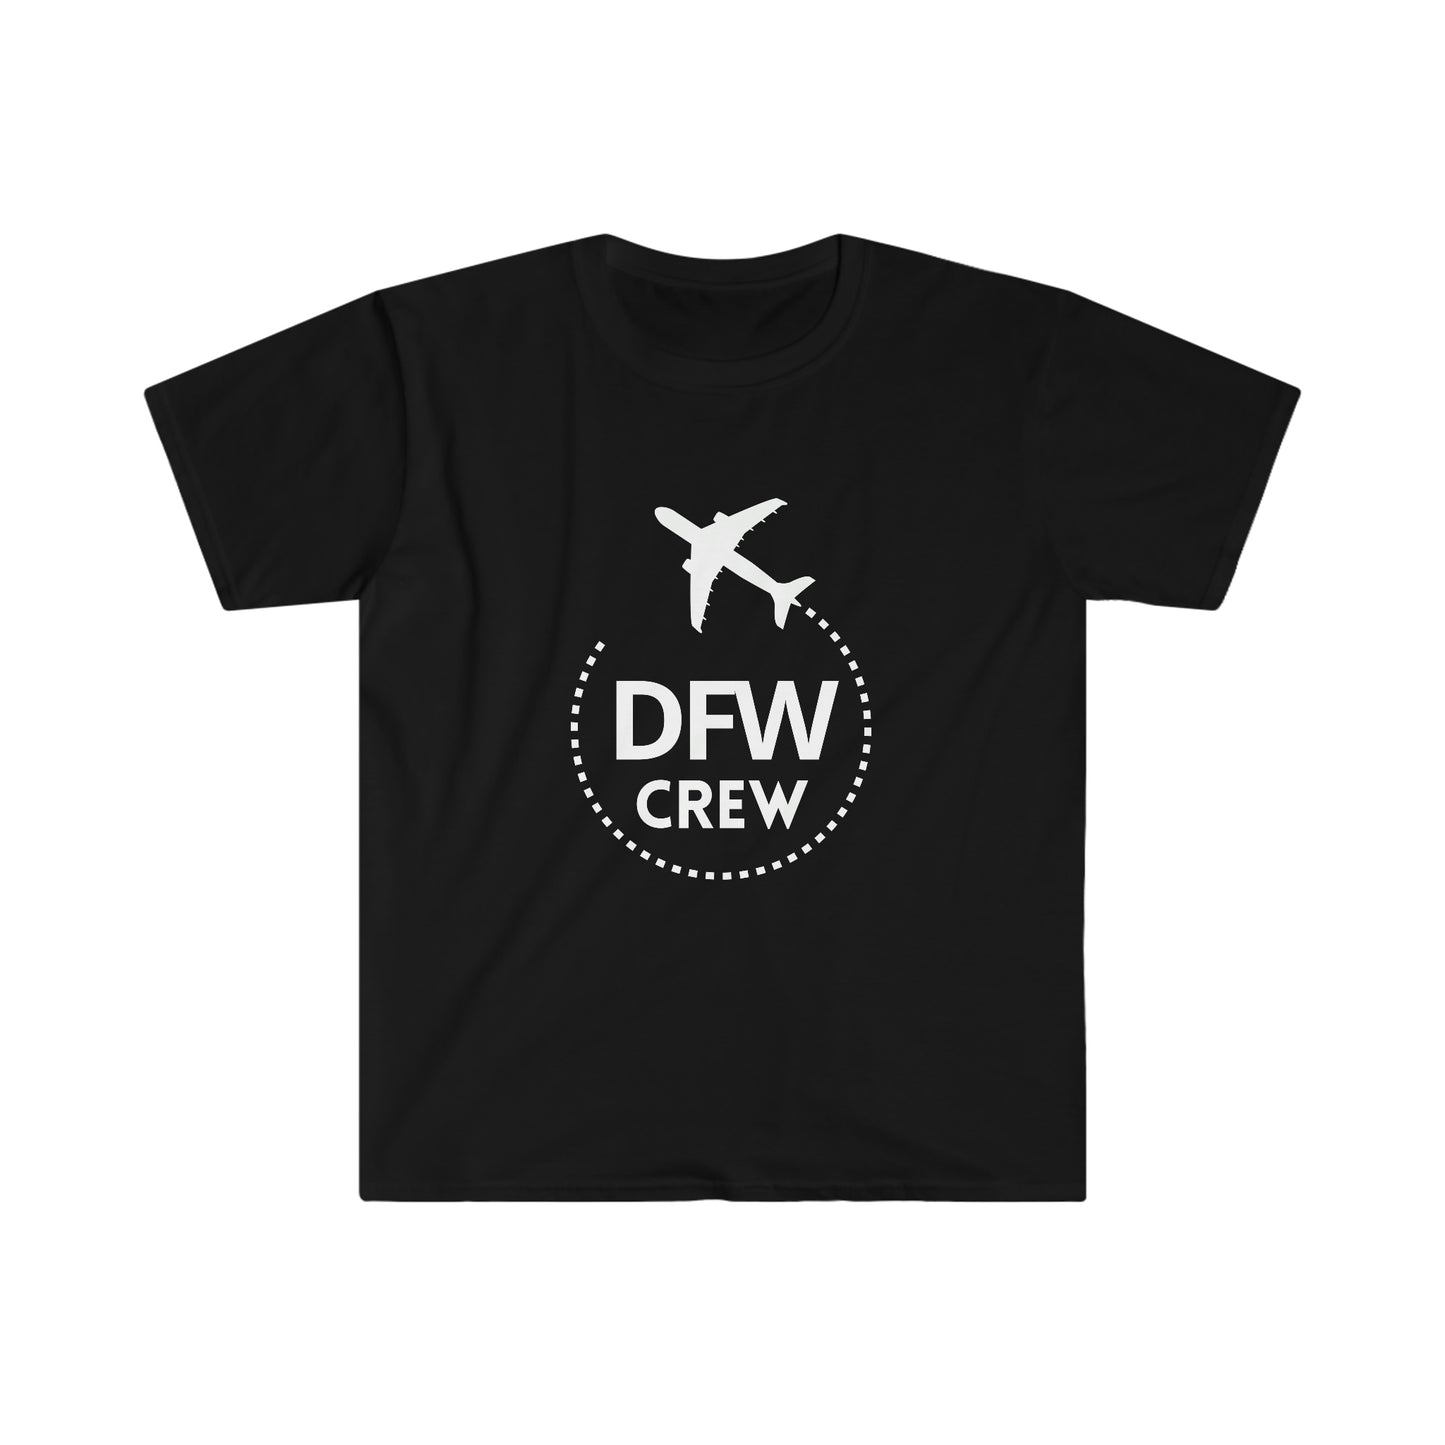 Dallas Ft Worth Airport DFW Crew Swag Aviation & Travel T-Shirt